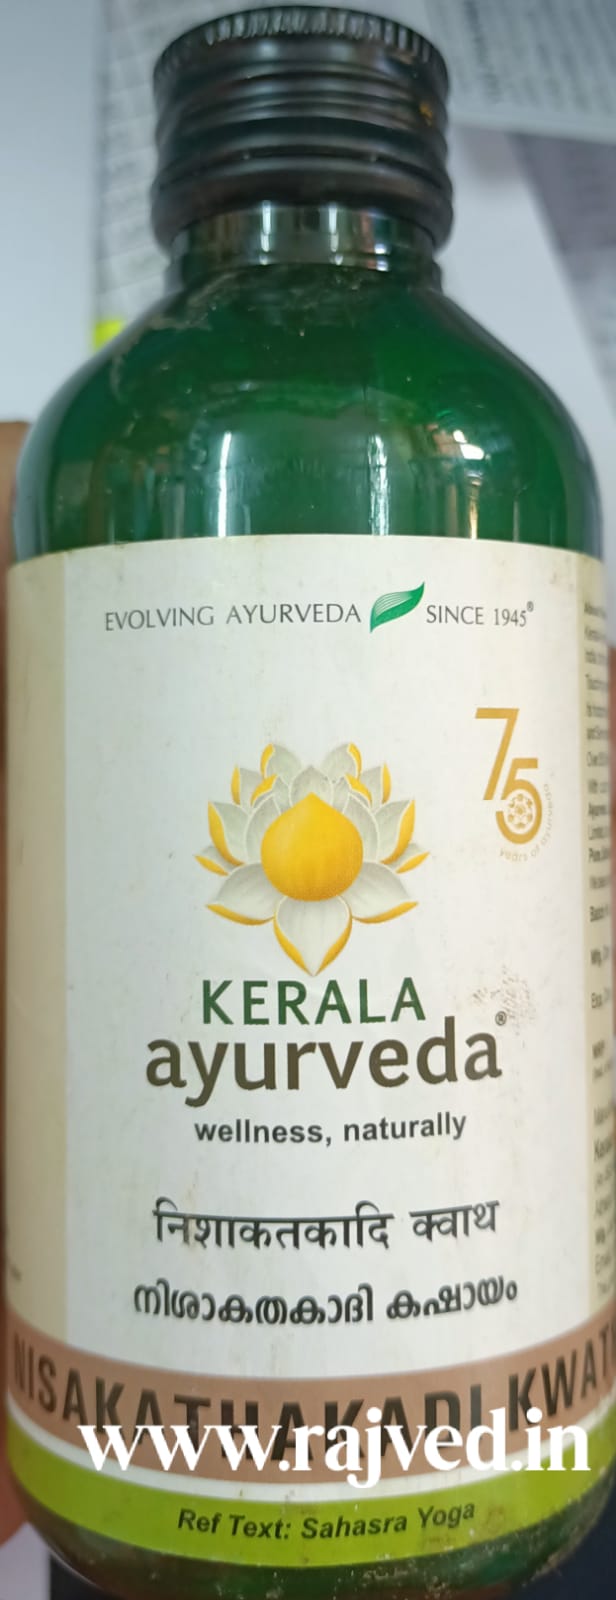 Nisakathakadi kwath 200 ml kerala ayurveda Ltd